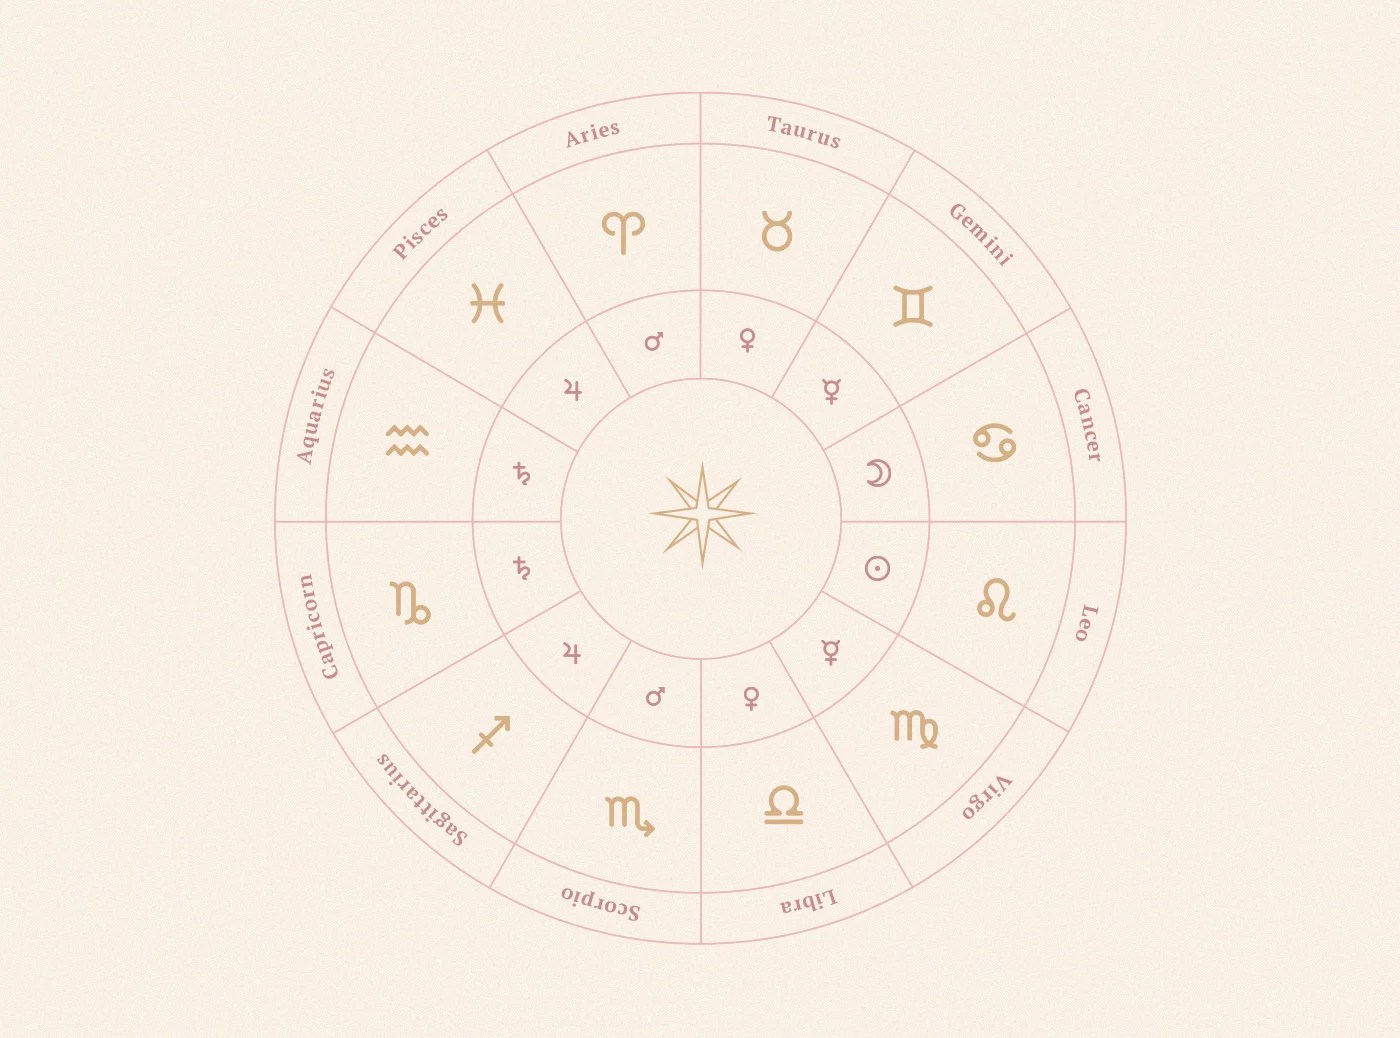 symbols for planets natal